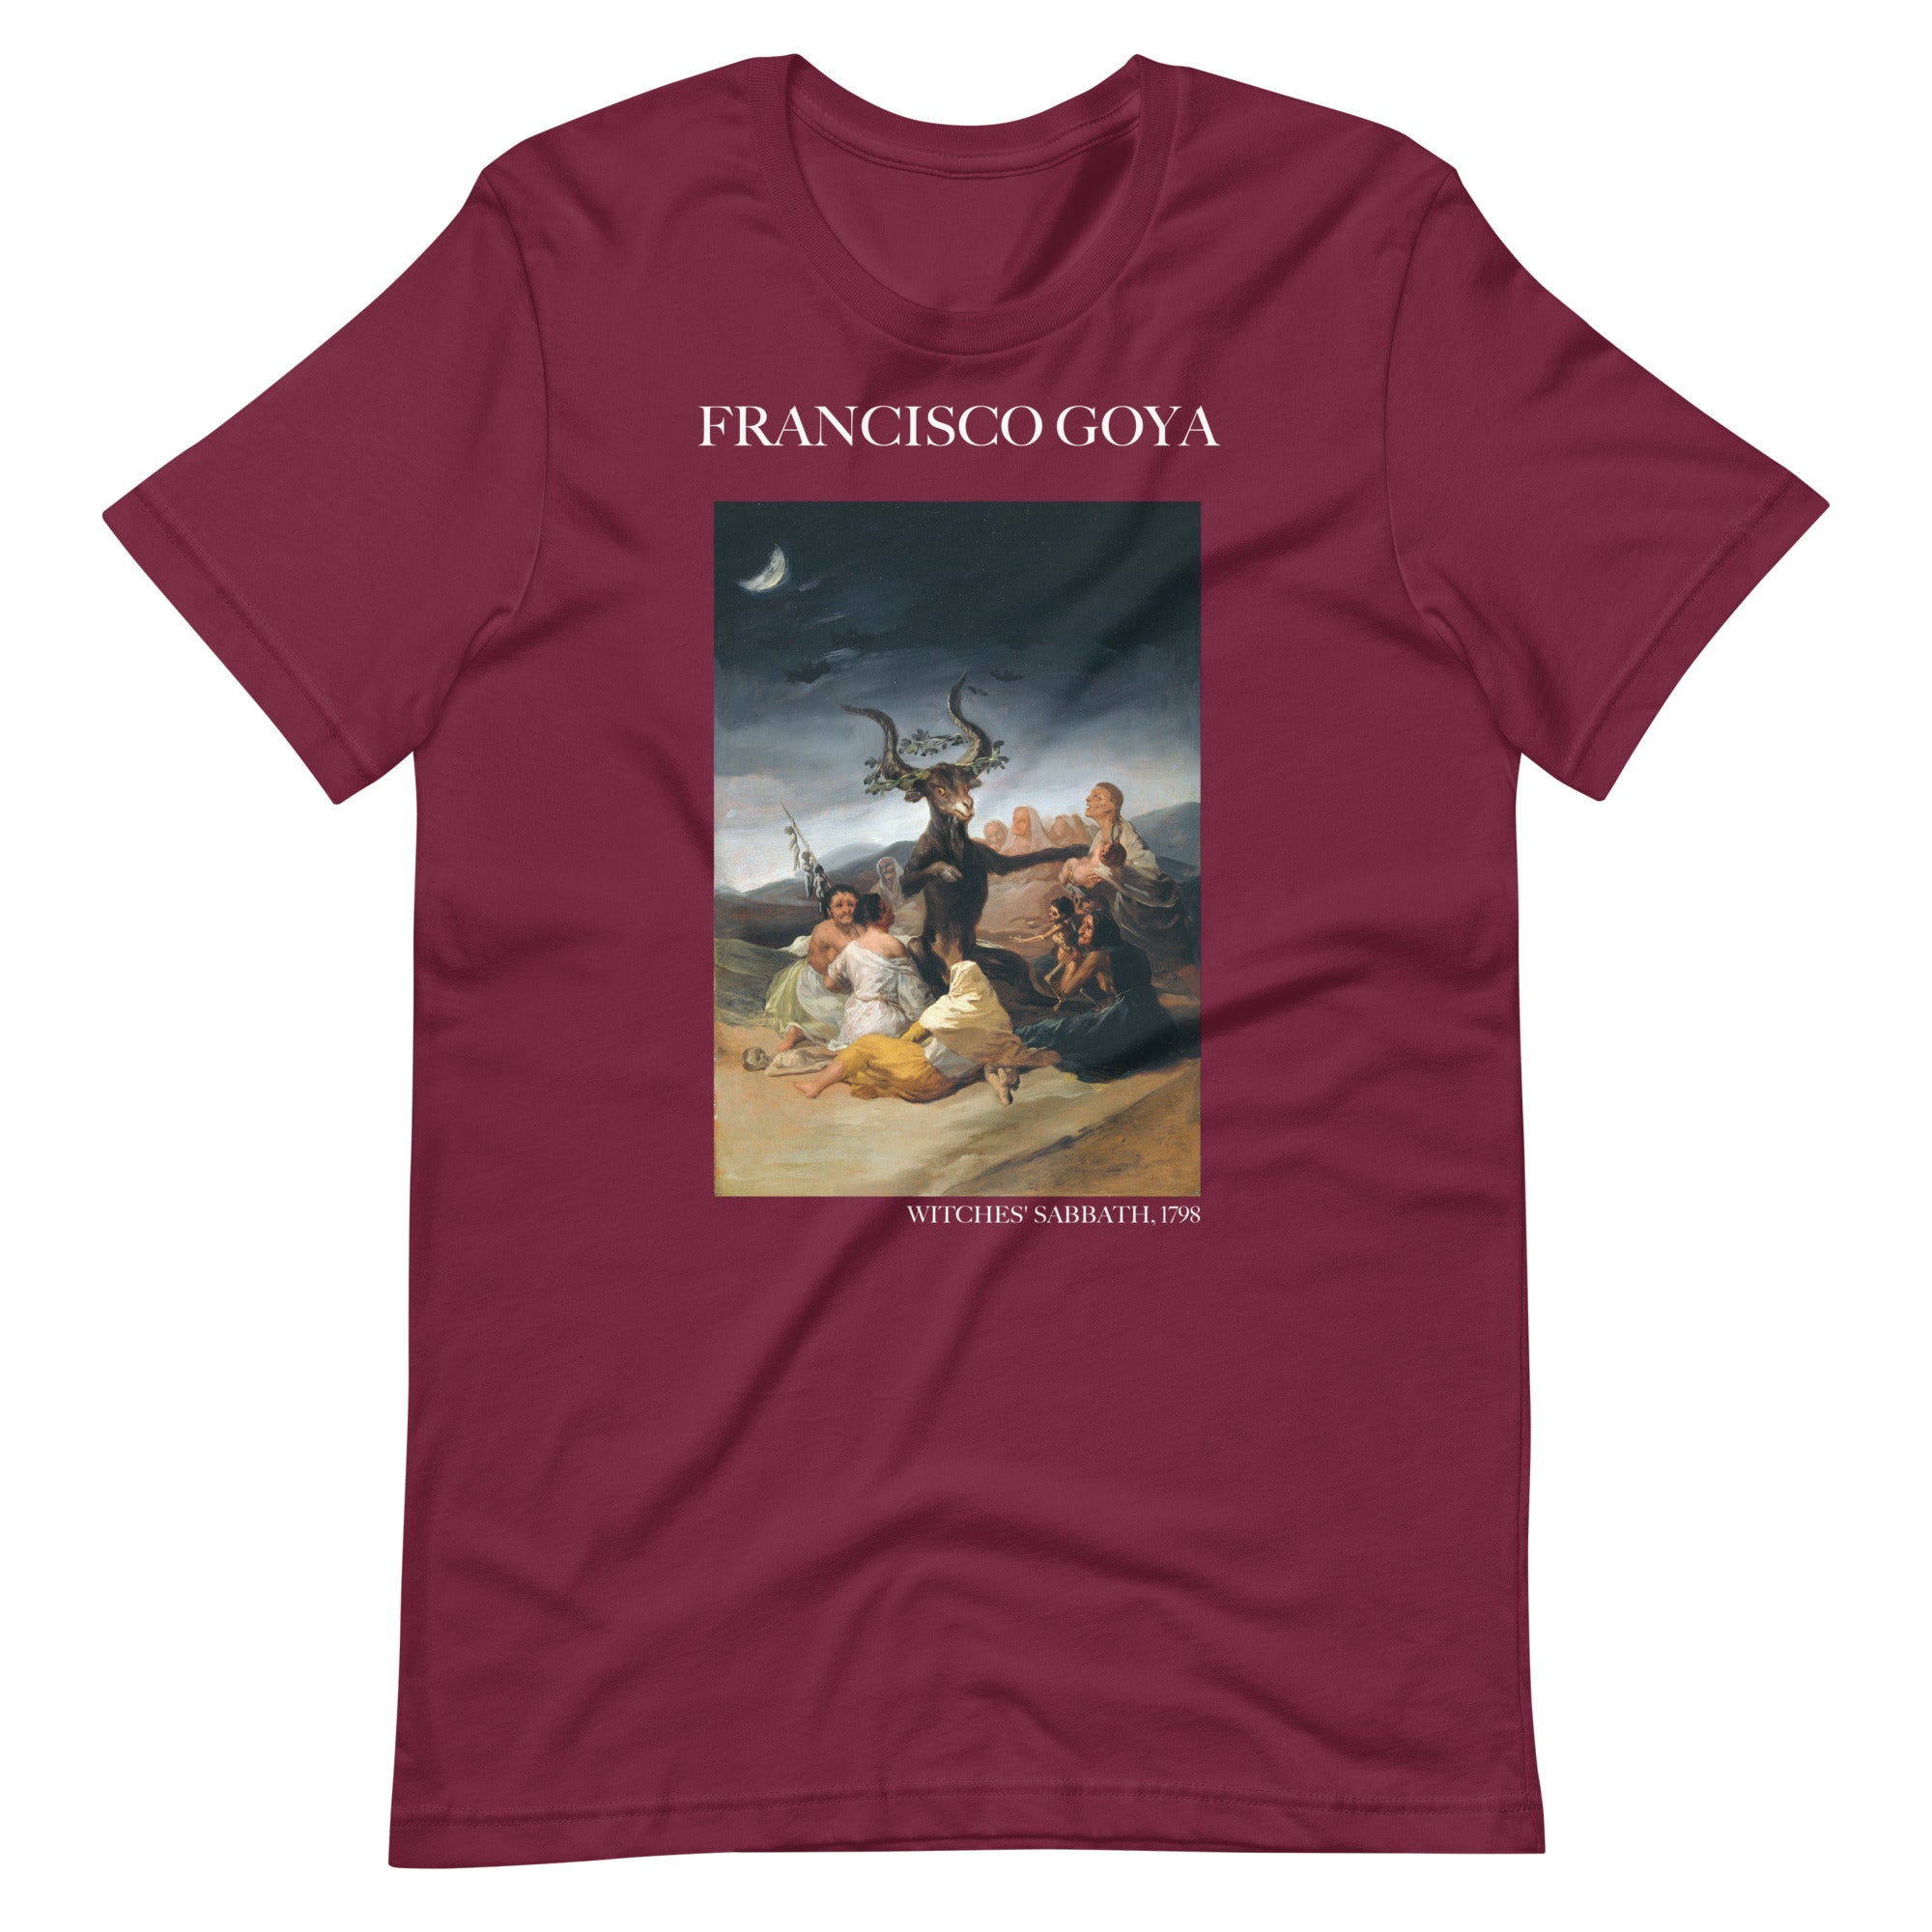 Francisco Goya 'Witches' Sabbath' Famous Painting T-Shirt | Unisex Classic Art Tee